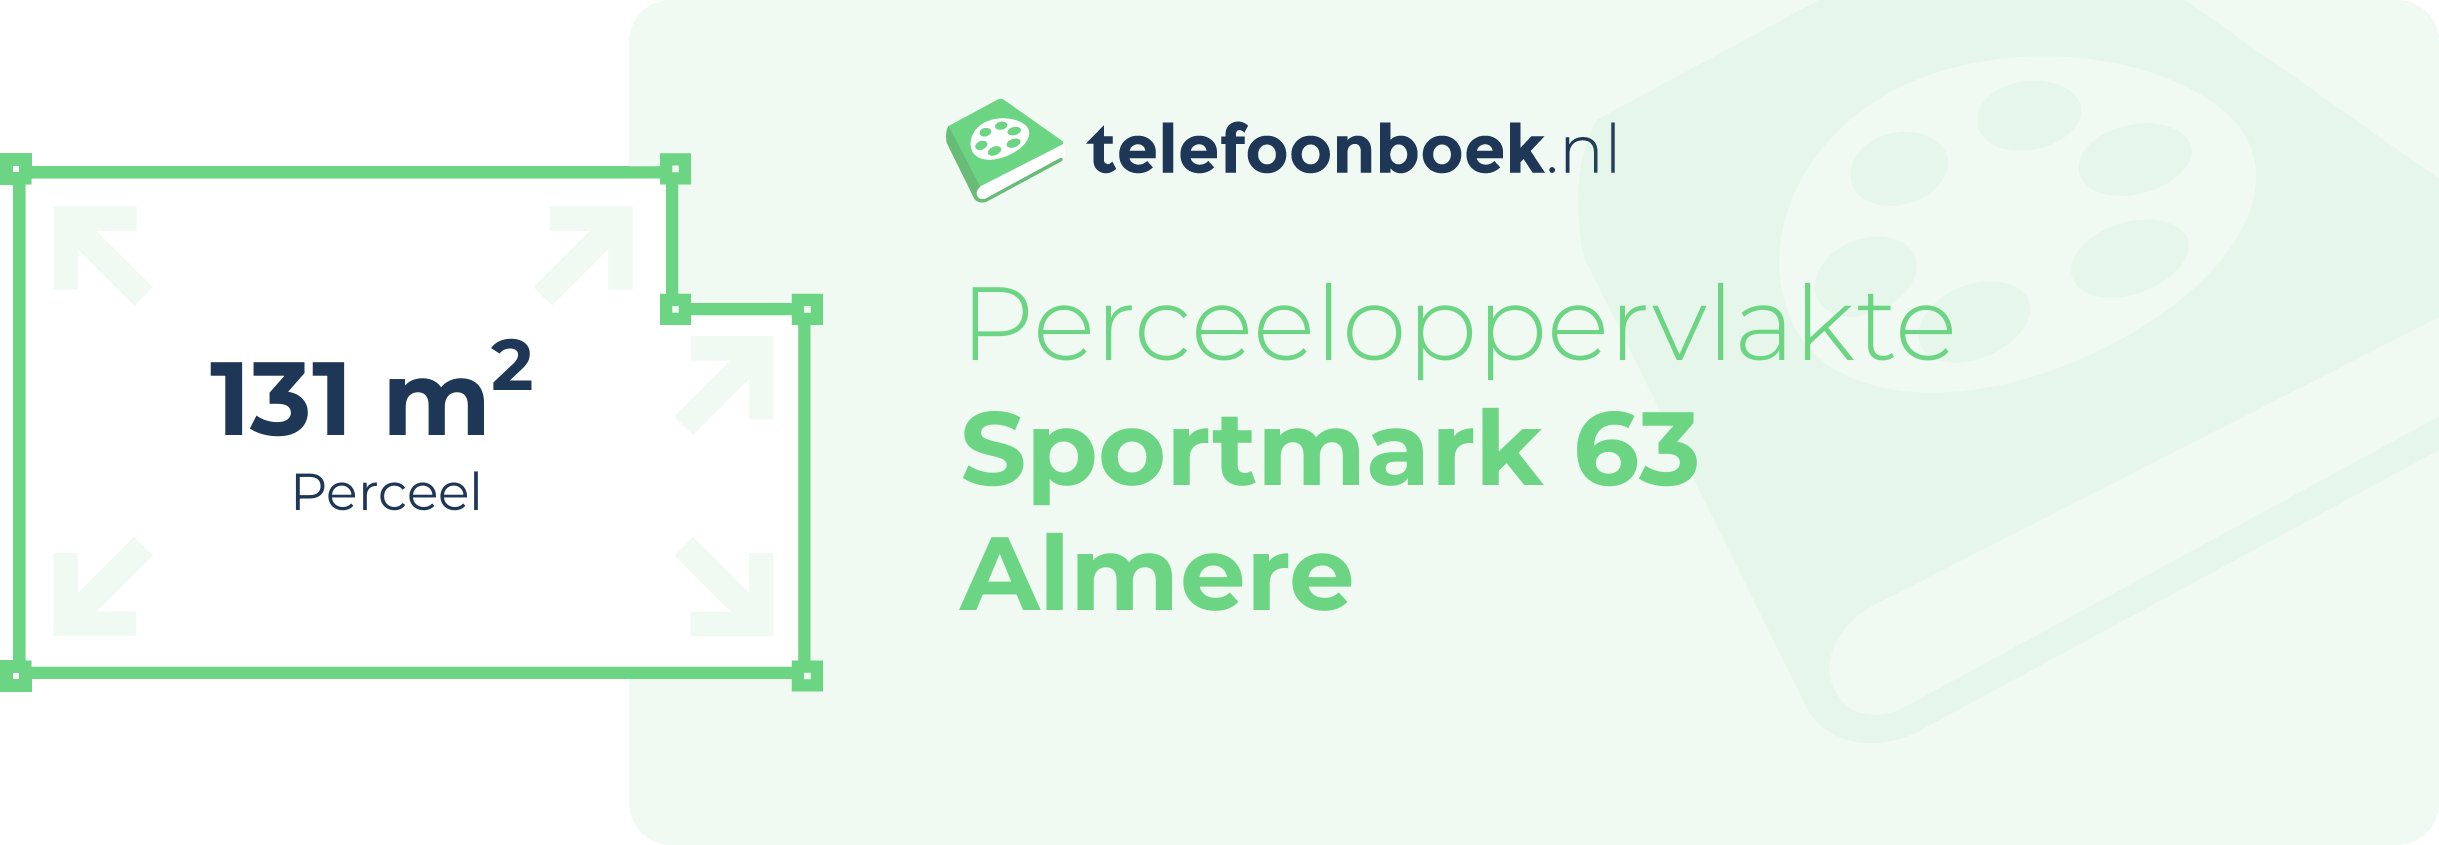 Perceeloppervlakte Sportmark 63 Almere